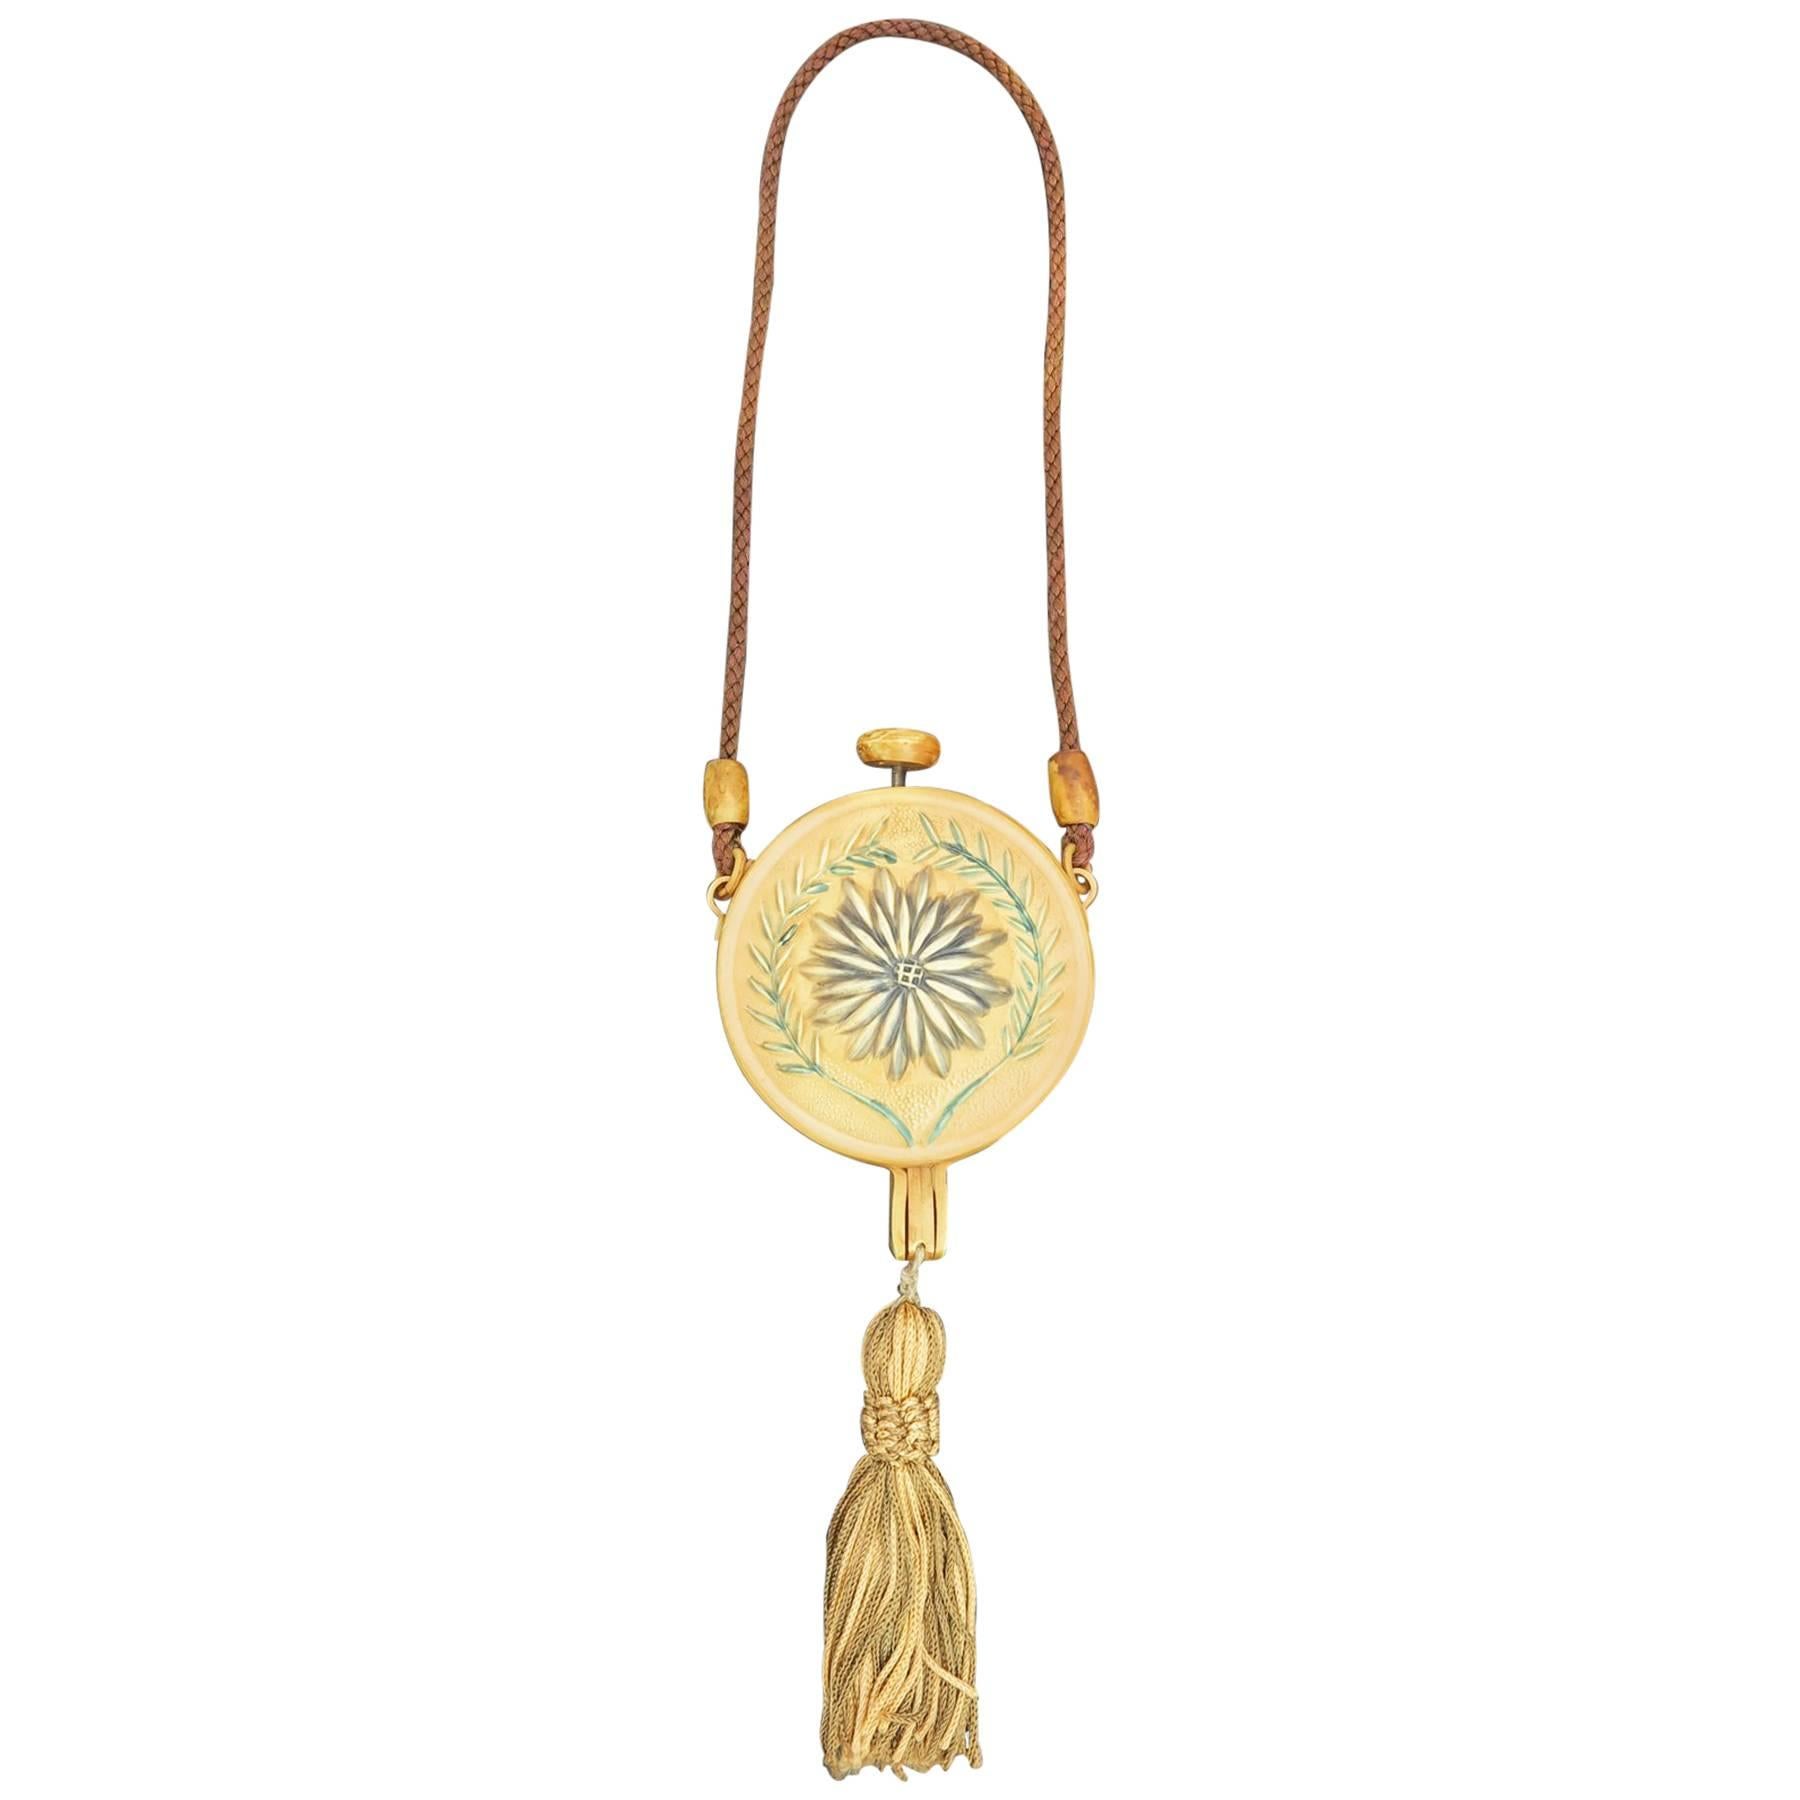 1920s floral celluloid tasseled dance purse nécessaire